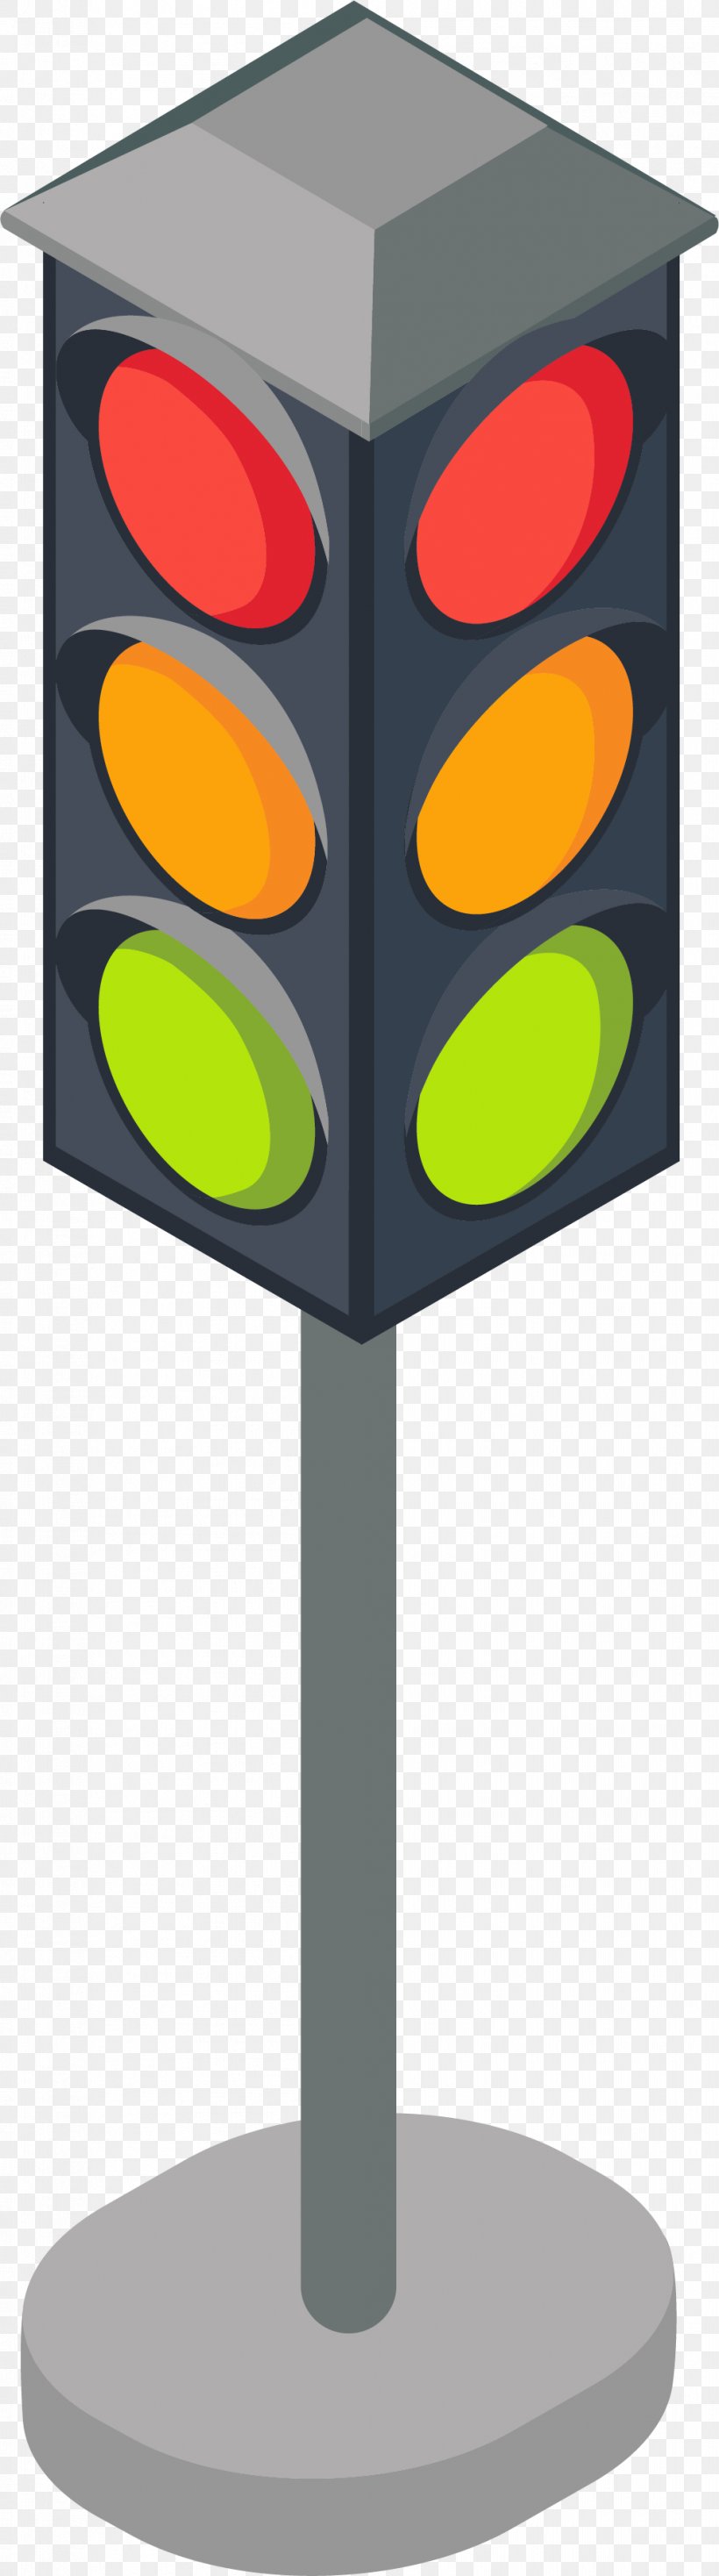 Traffic Light Cartoon Clip Art, PNG, 1005x3599px, Traffic Light, Cartoon, Light Fixture, Pedestrian Crossing, Royaltyfree Download Free